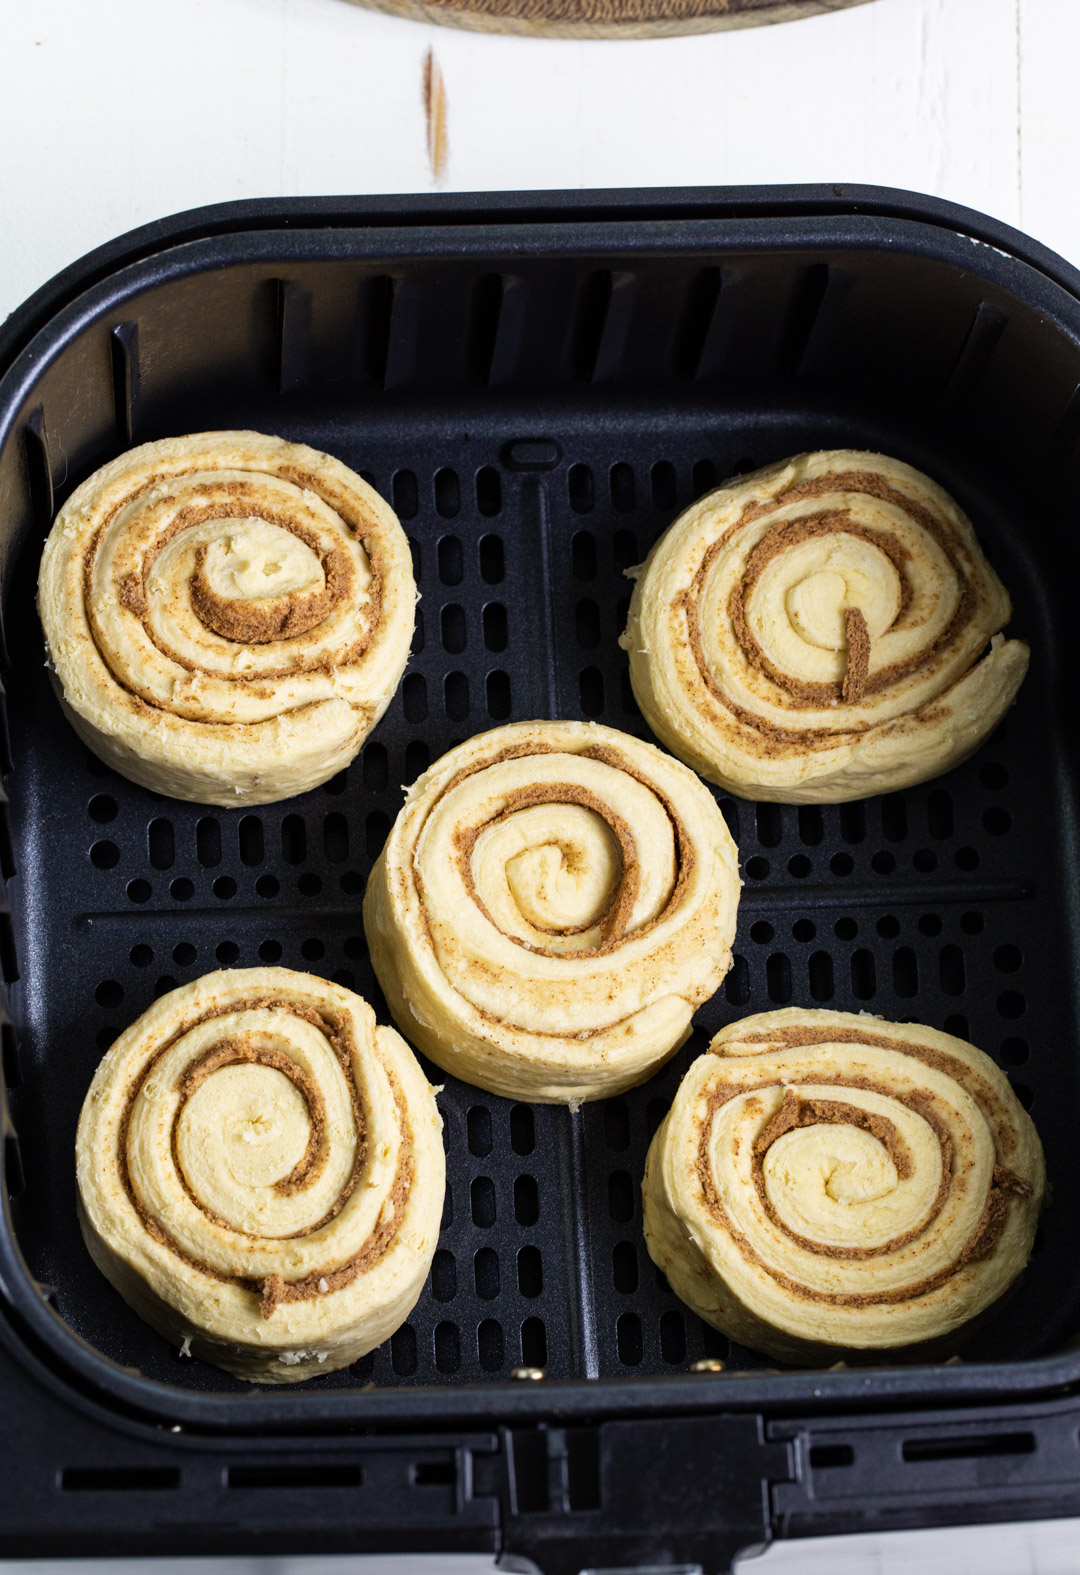 Uncooked cinnamon rolls in air fryer basket.